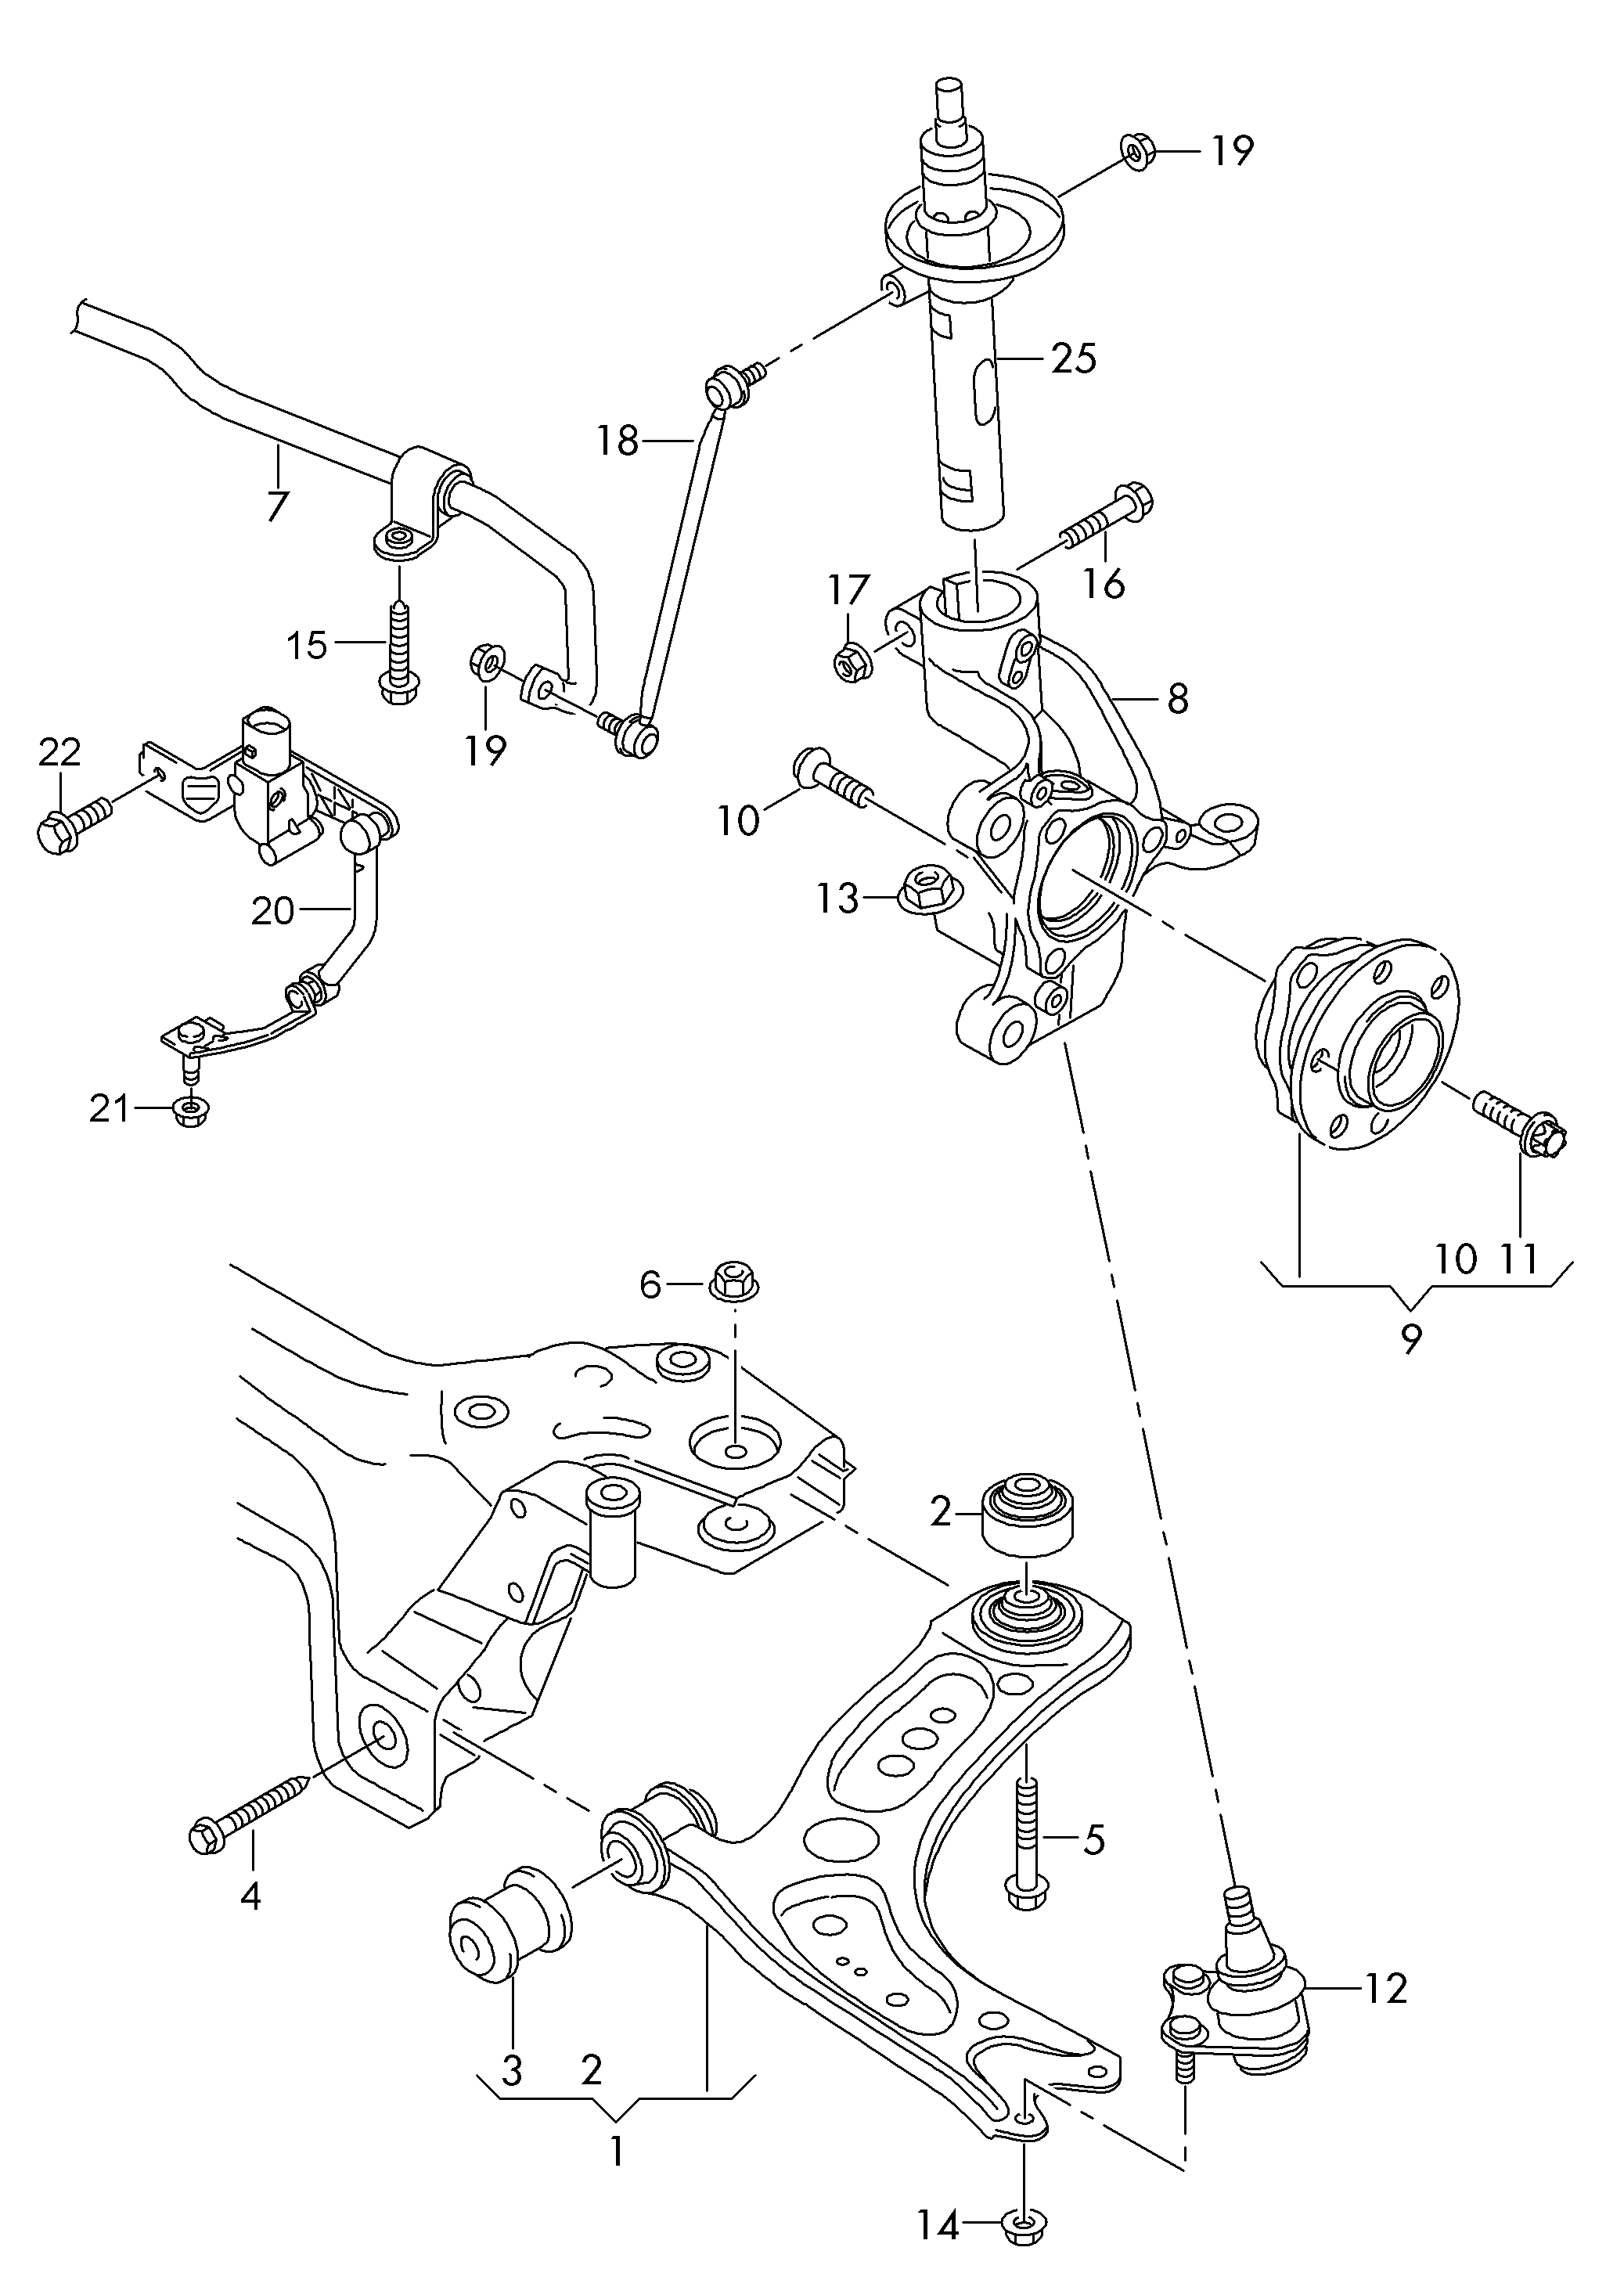 brazo transversal completomanguetabarra estabilizadora delantero - Octavia - oct